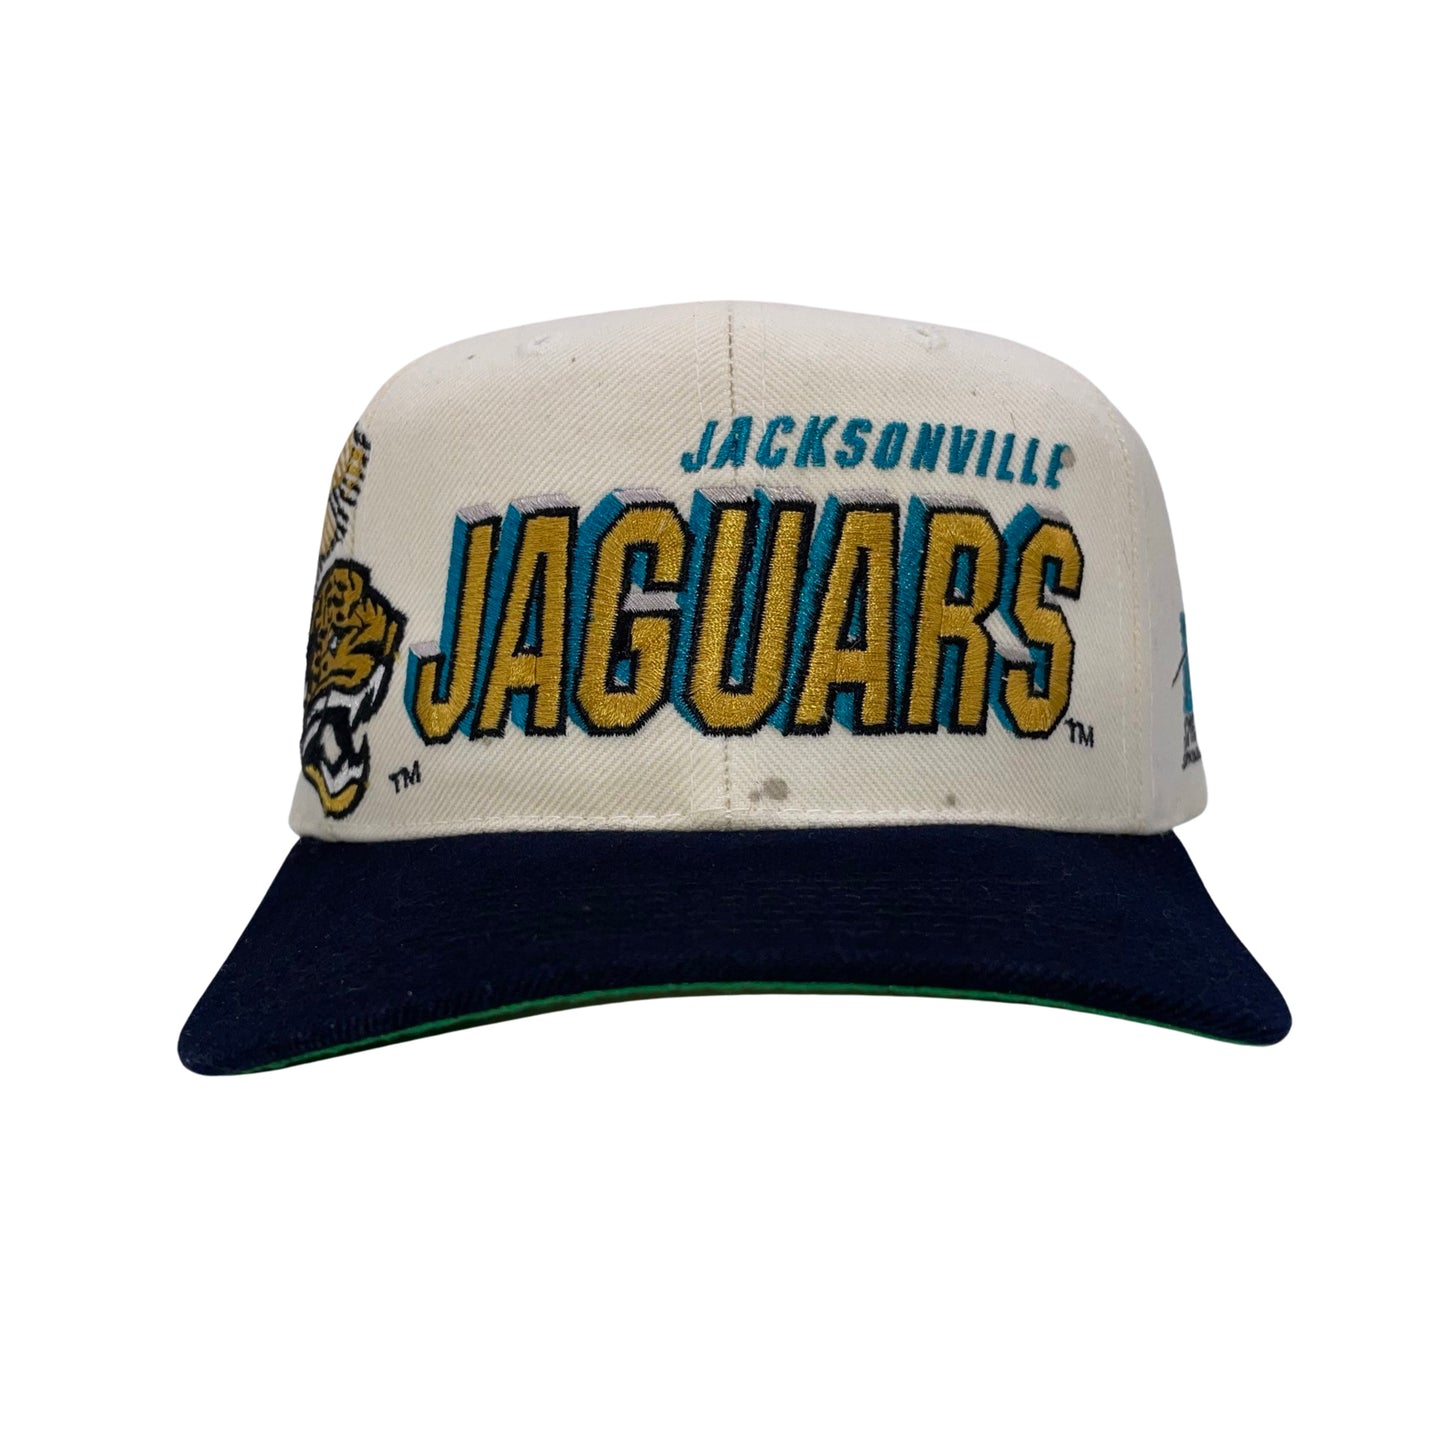 Vintage Jacksonville Jaguars SPORTS SPECIALTIES "Shadow" hat